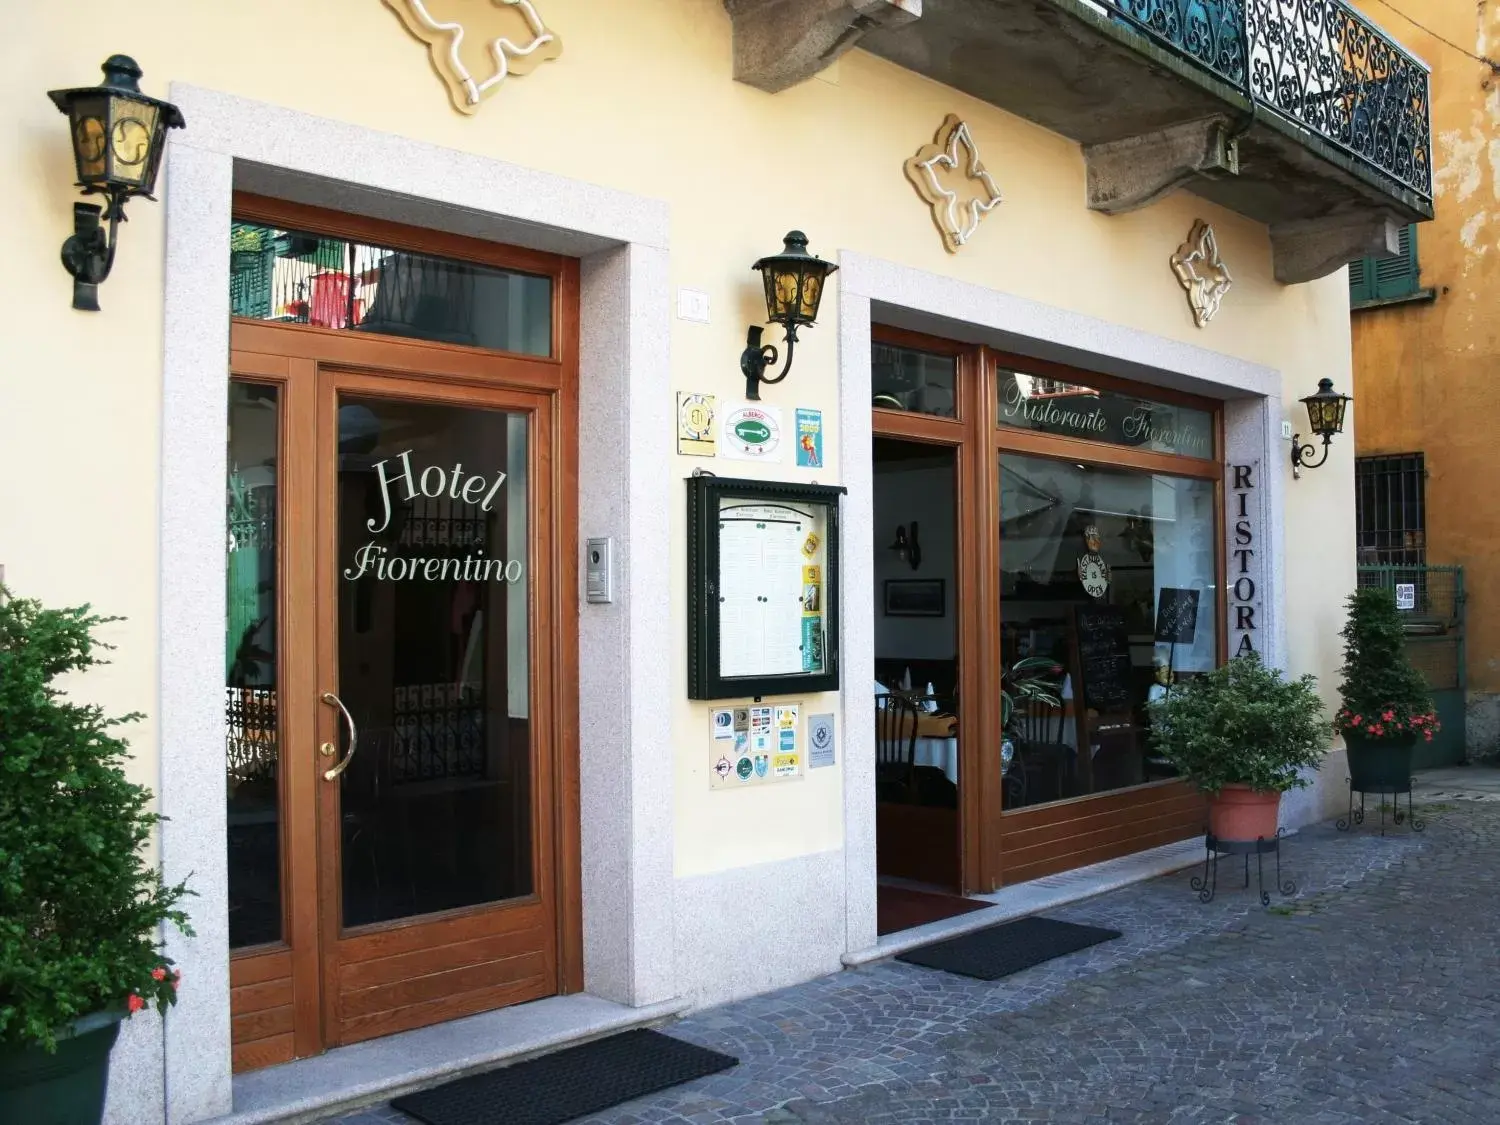 Facade/entrance in Hotel Fiorentino